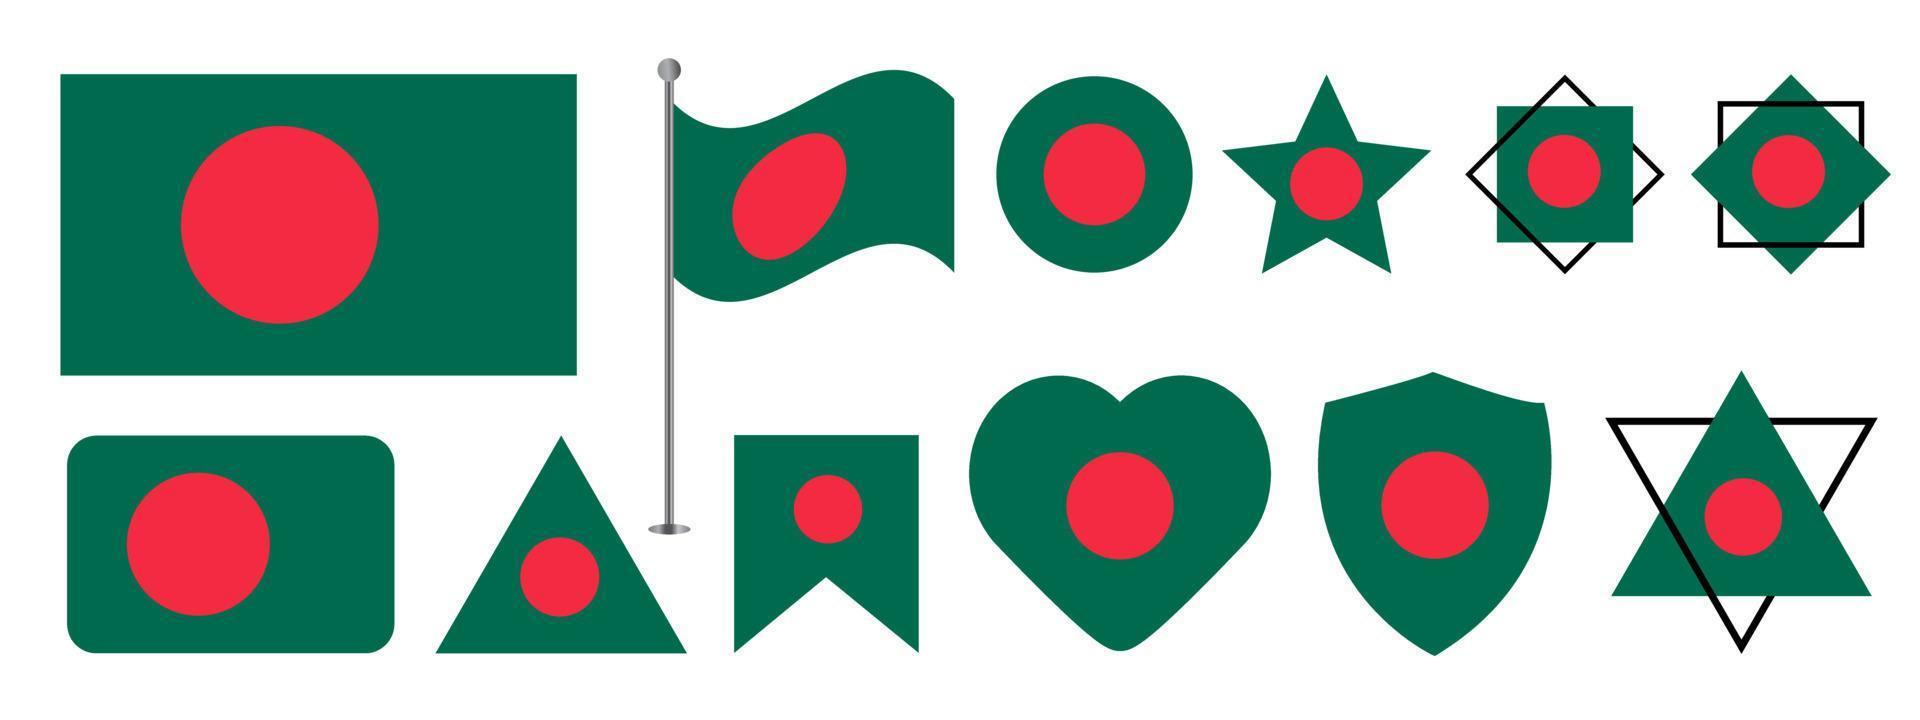 Bangladesh vlag ontwerp. Bangladesh nationale vlag vector ontwerpset. vlag van Bangladesh vectorillustratie